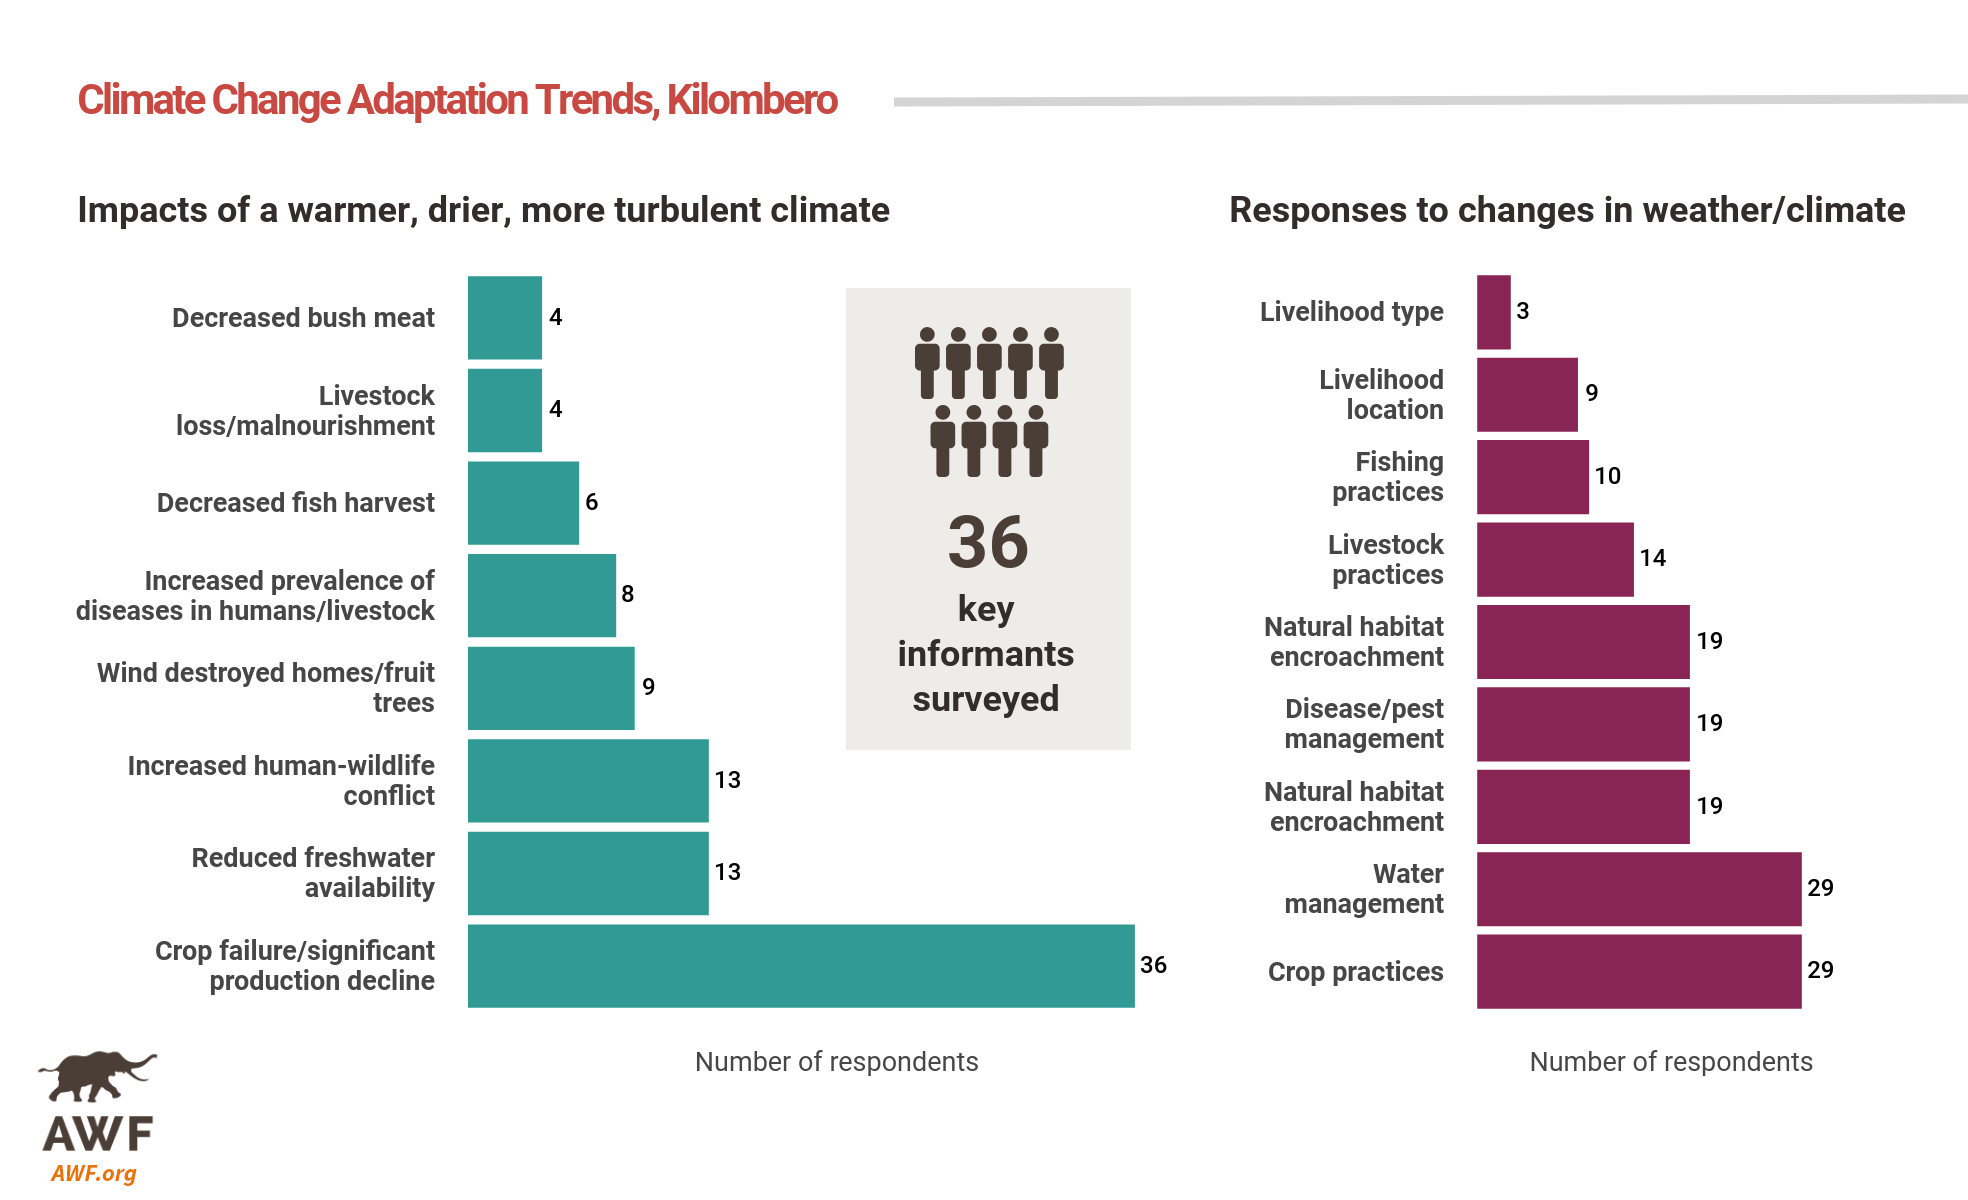 Climate change adaptation trends in Kilombero, Tanzania